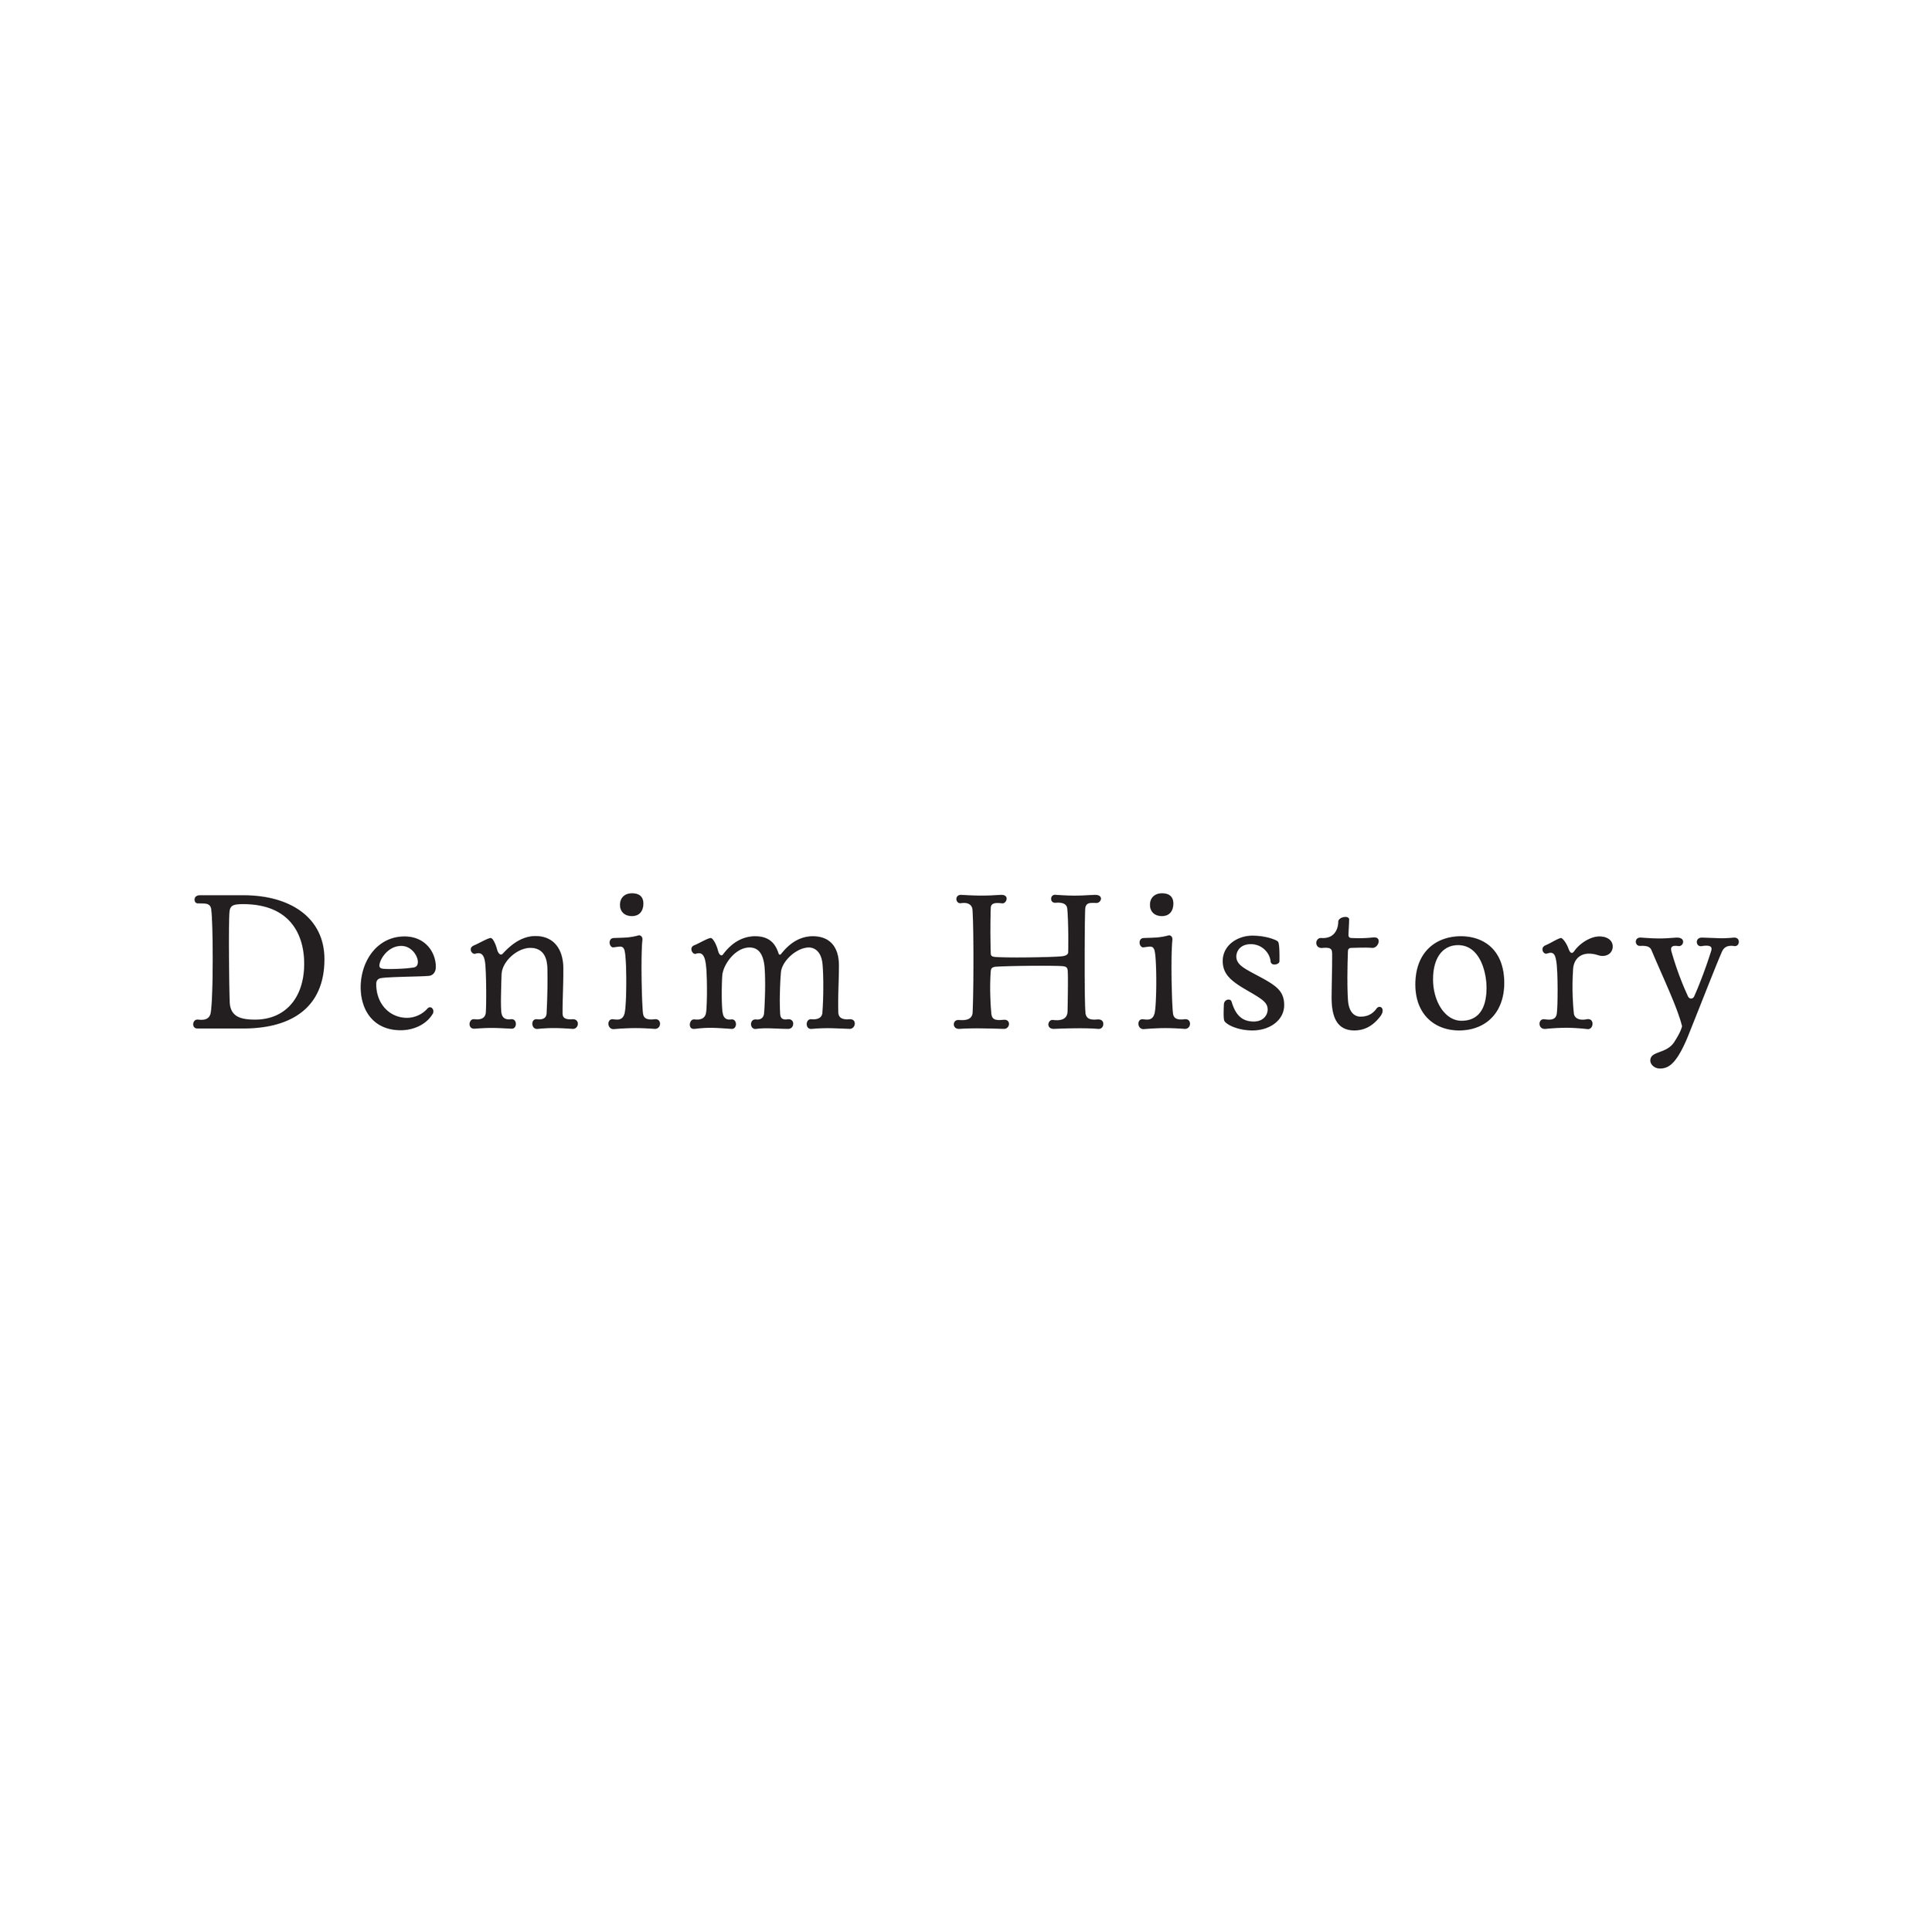 Denim History